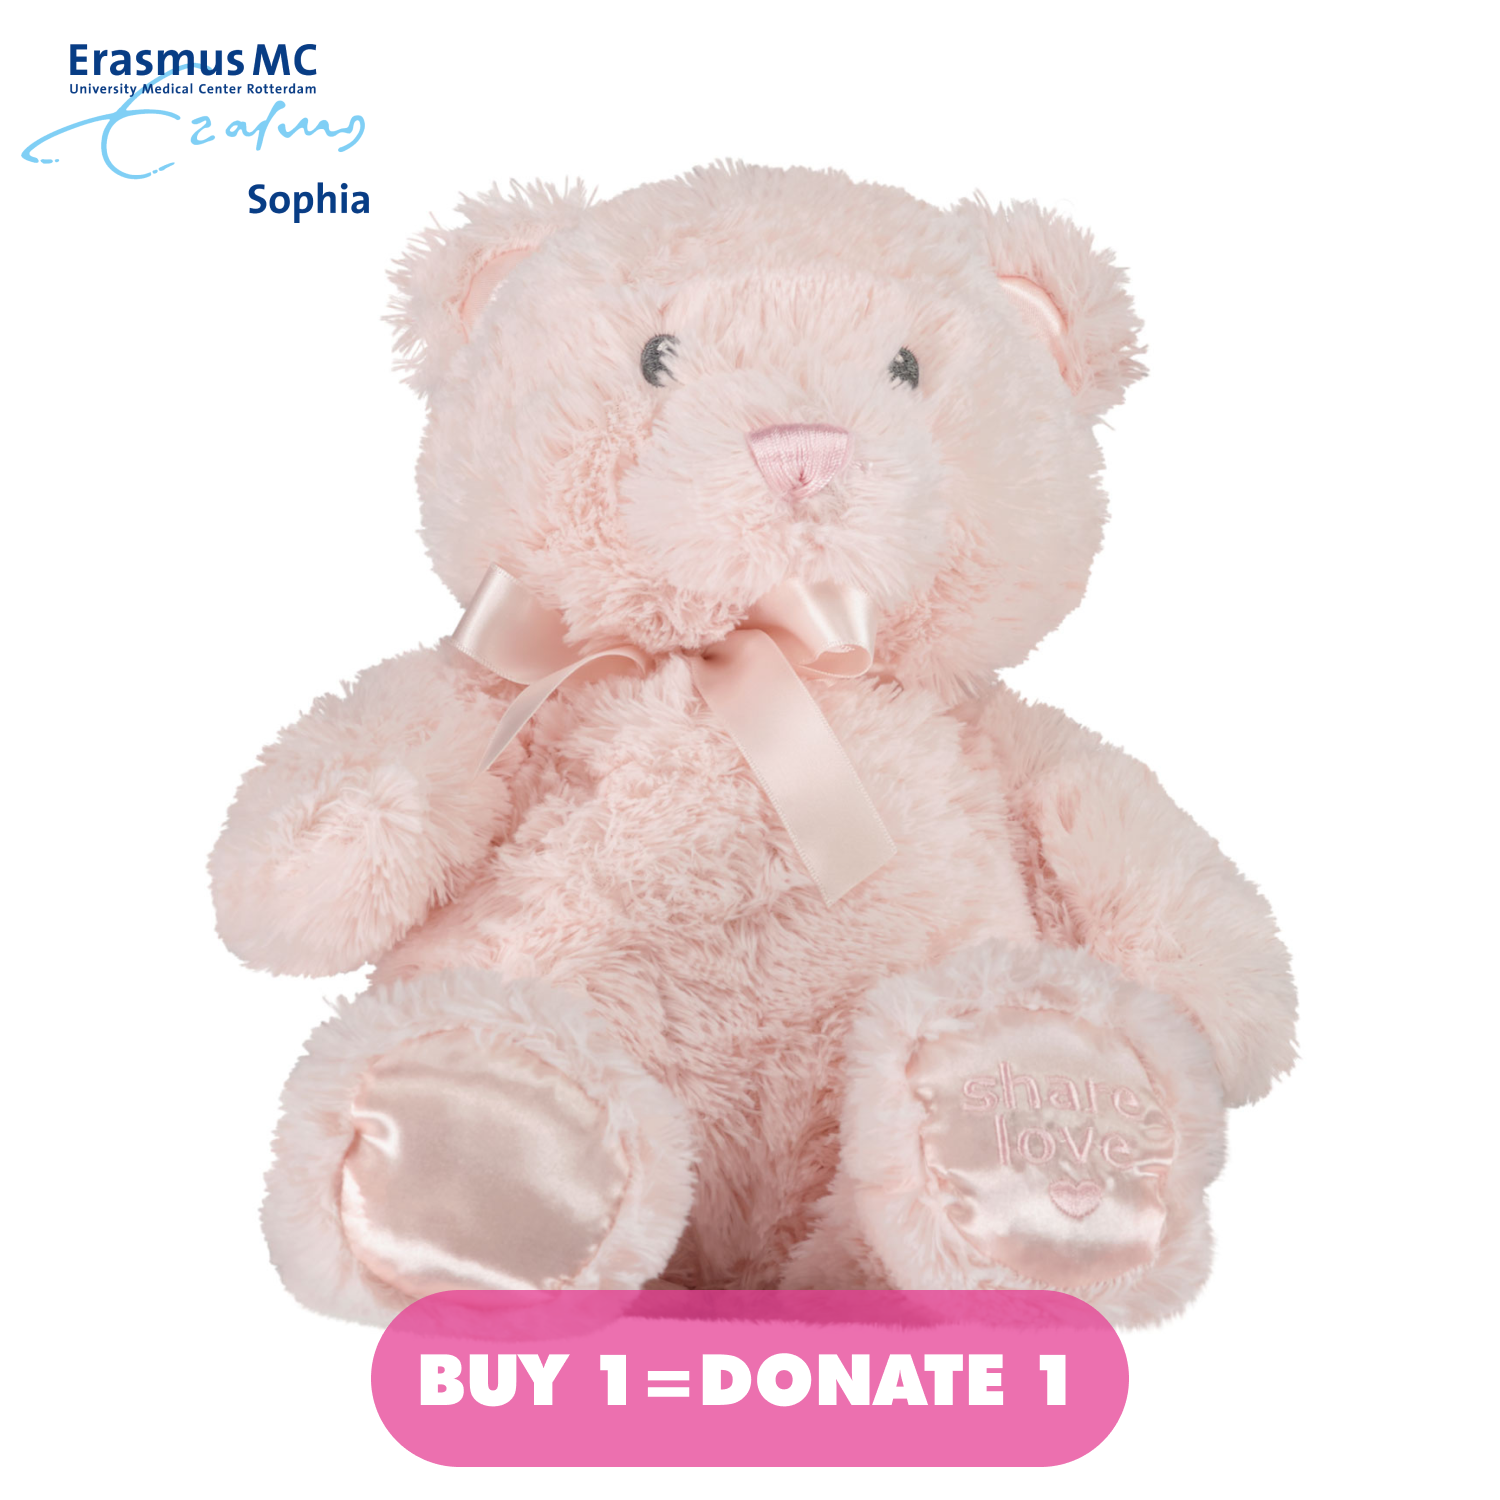 Afbeelding van Coccinelle knuffel 35 cm babyaccessoire licht roze